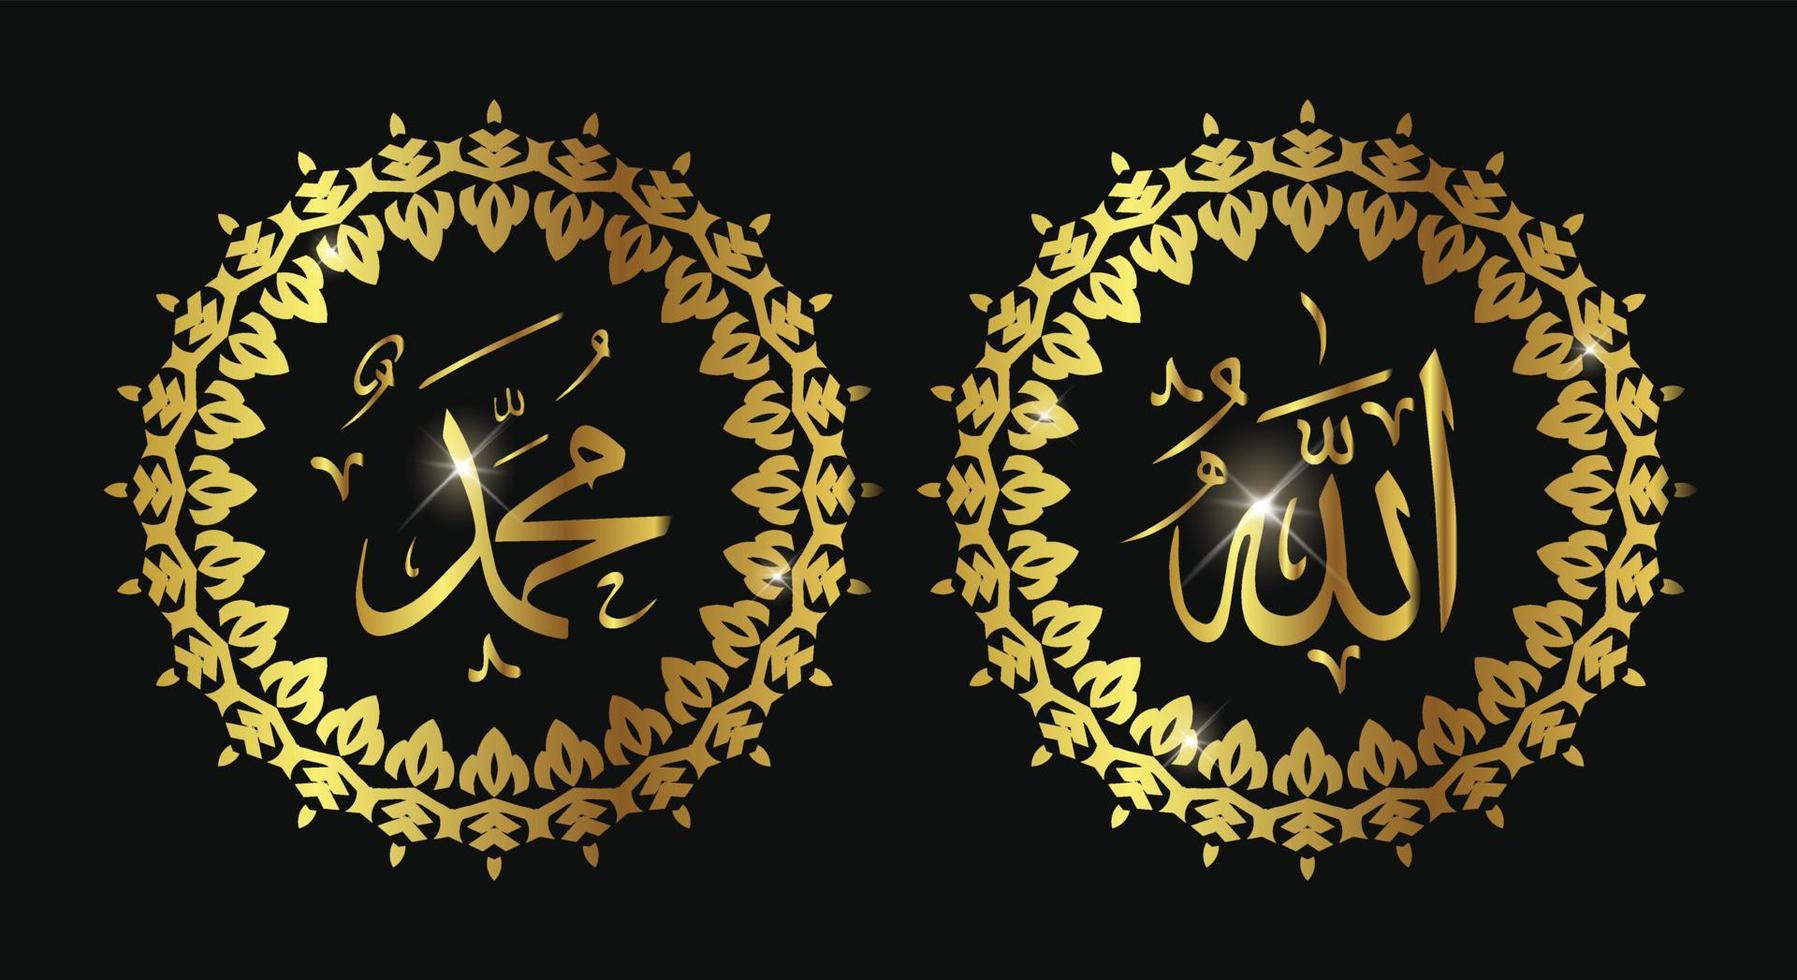 allah muhammad nom d'allah muhammad, art de calligraphie islamique arabe allah muhammad, isolé sur fond sombre. vecteur